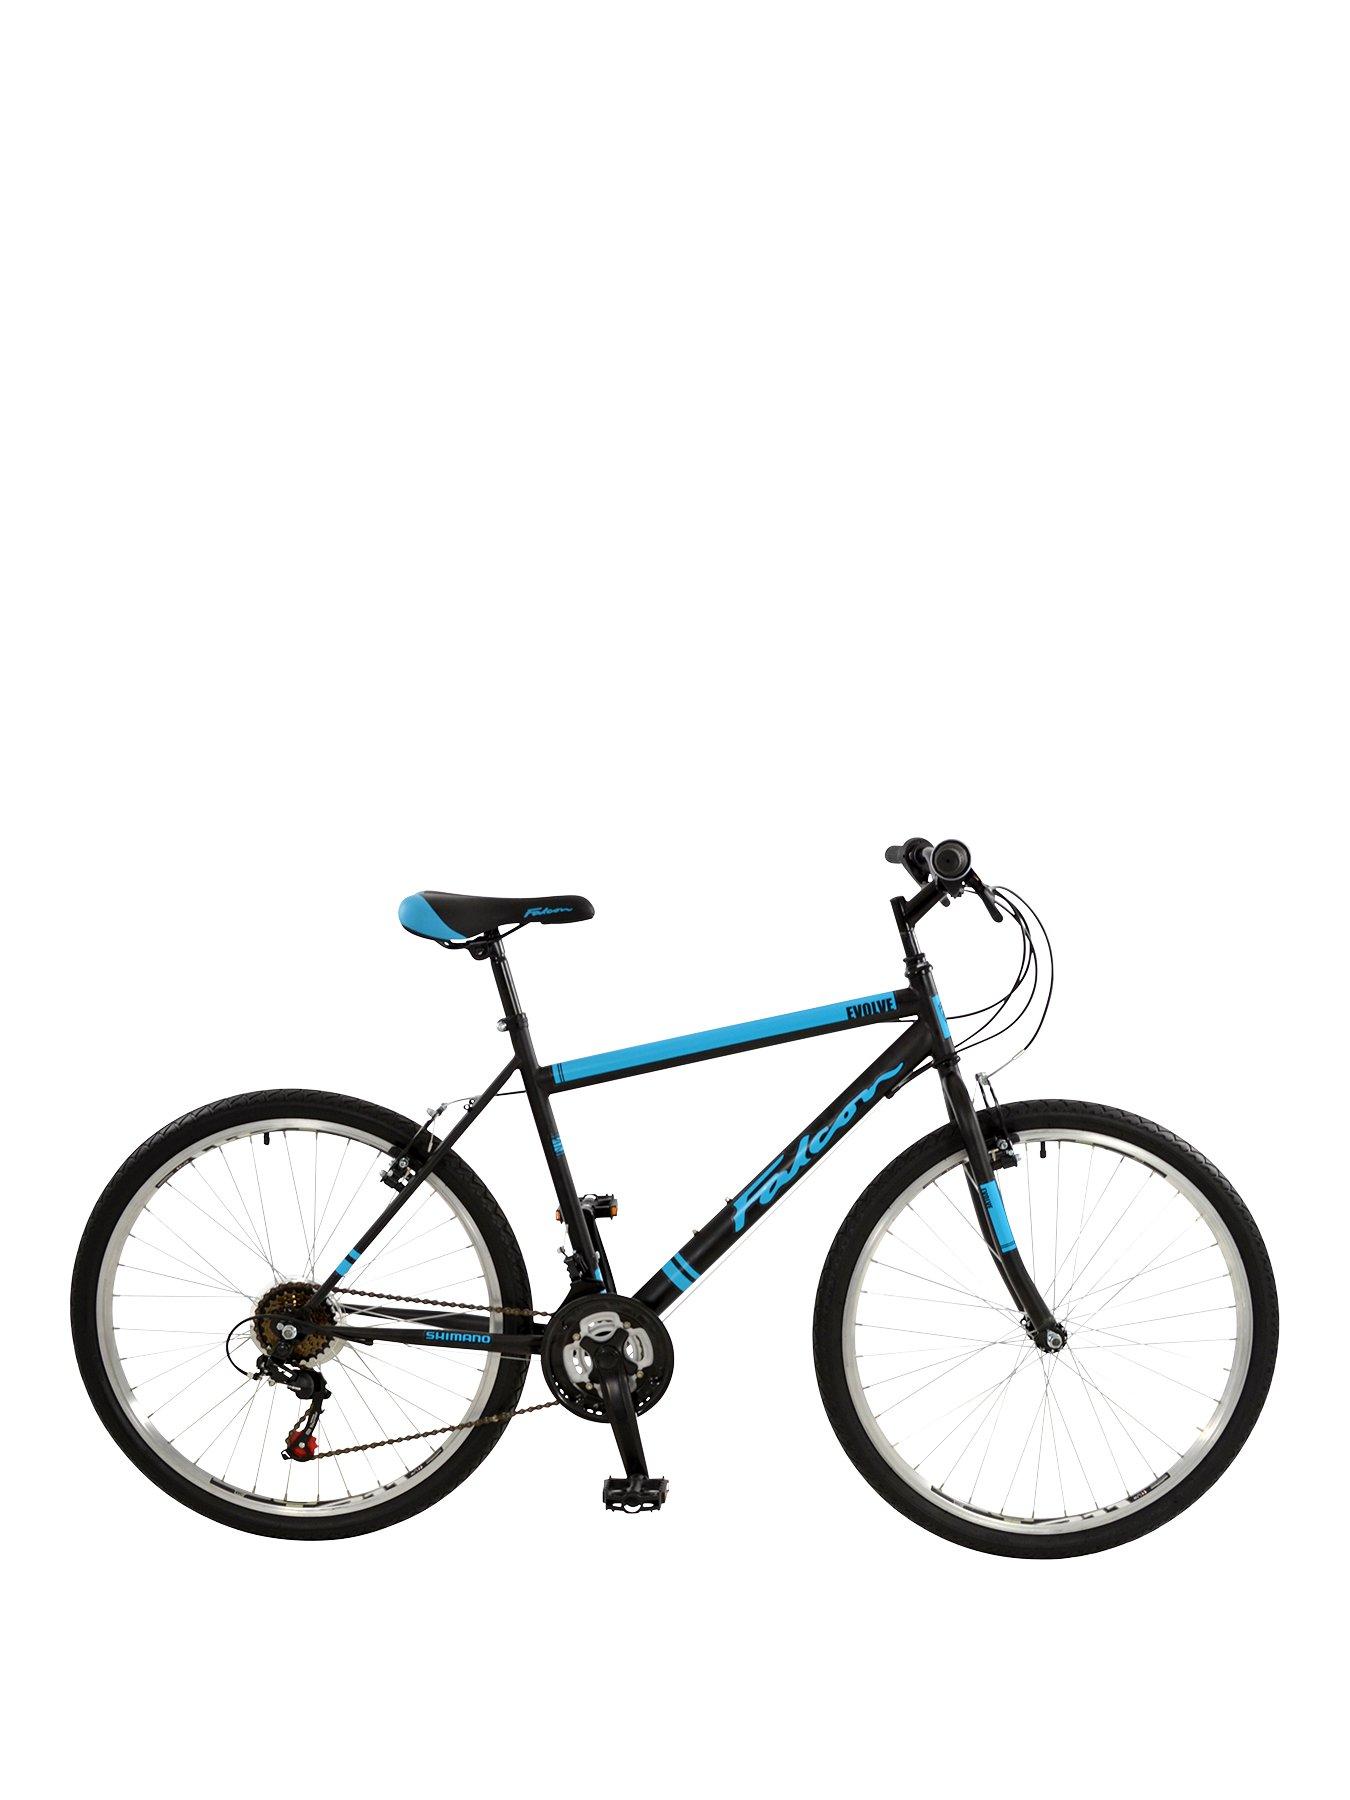 mens mountain bike 19 inch frame